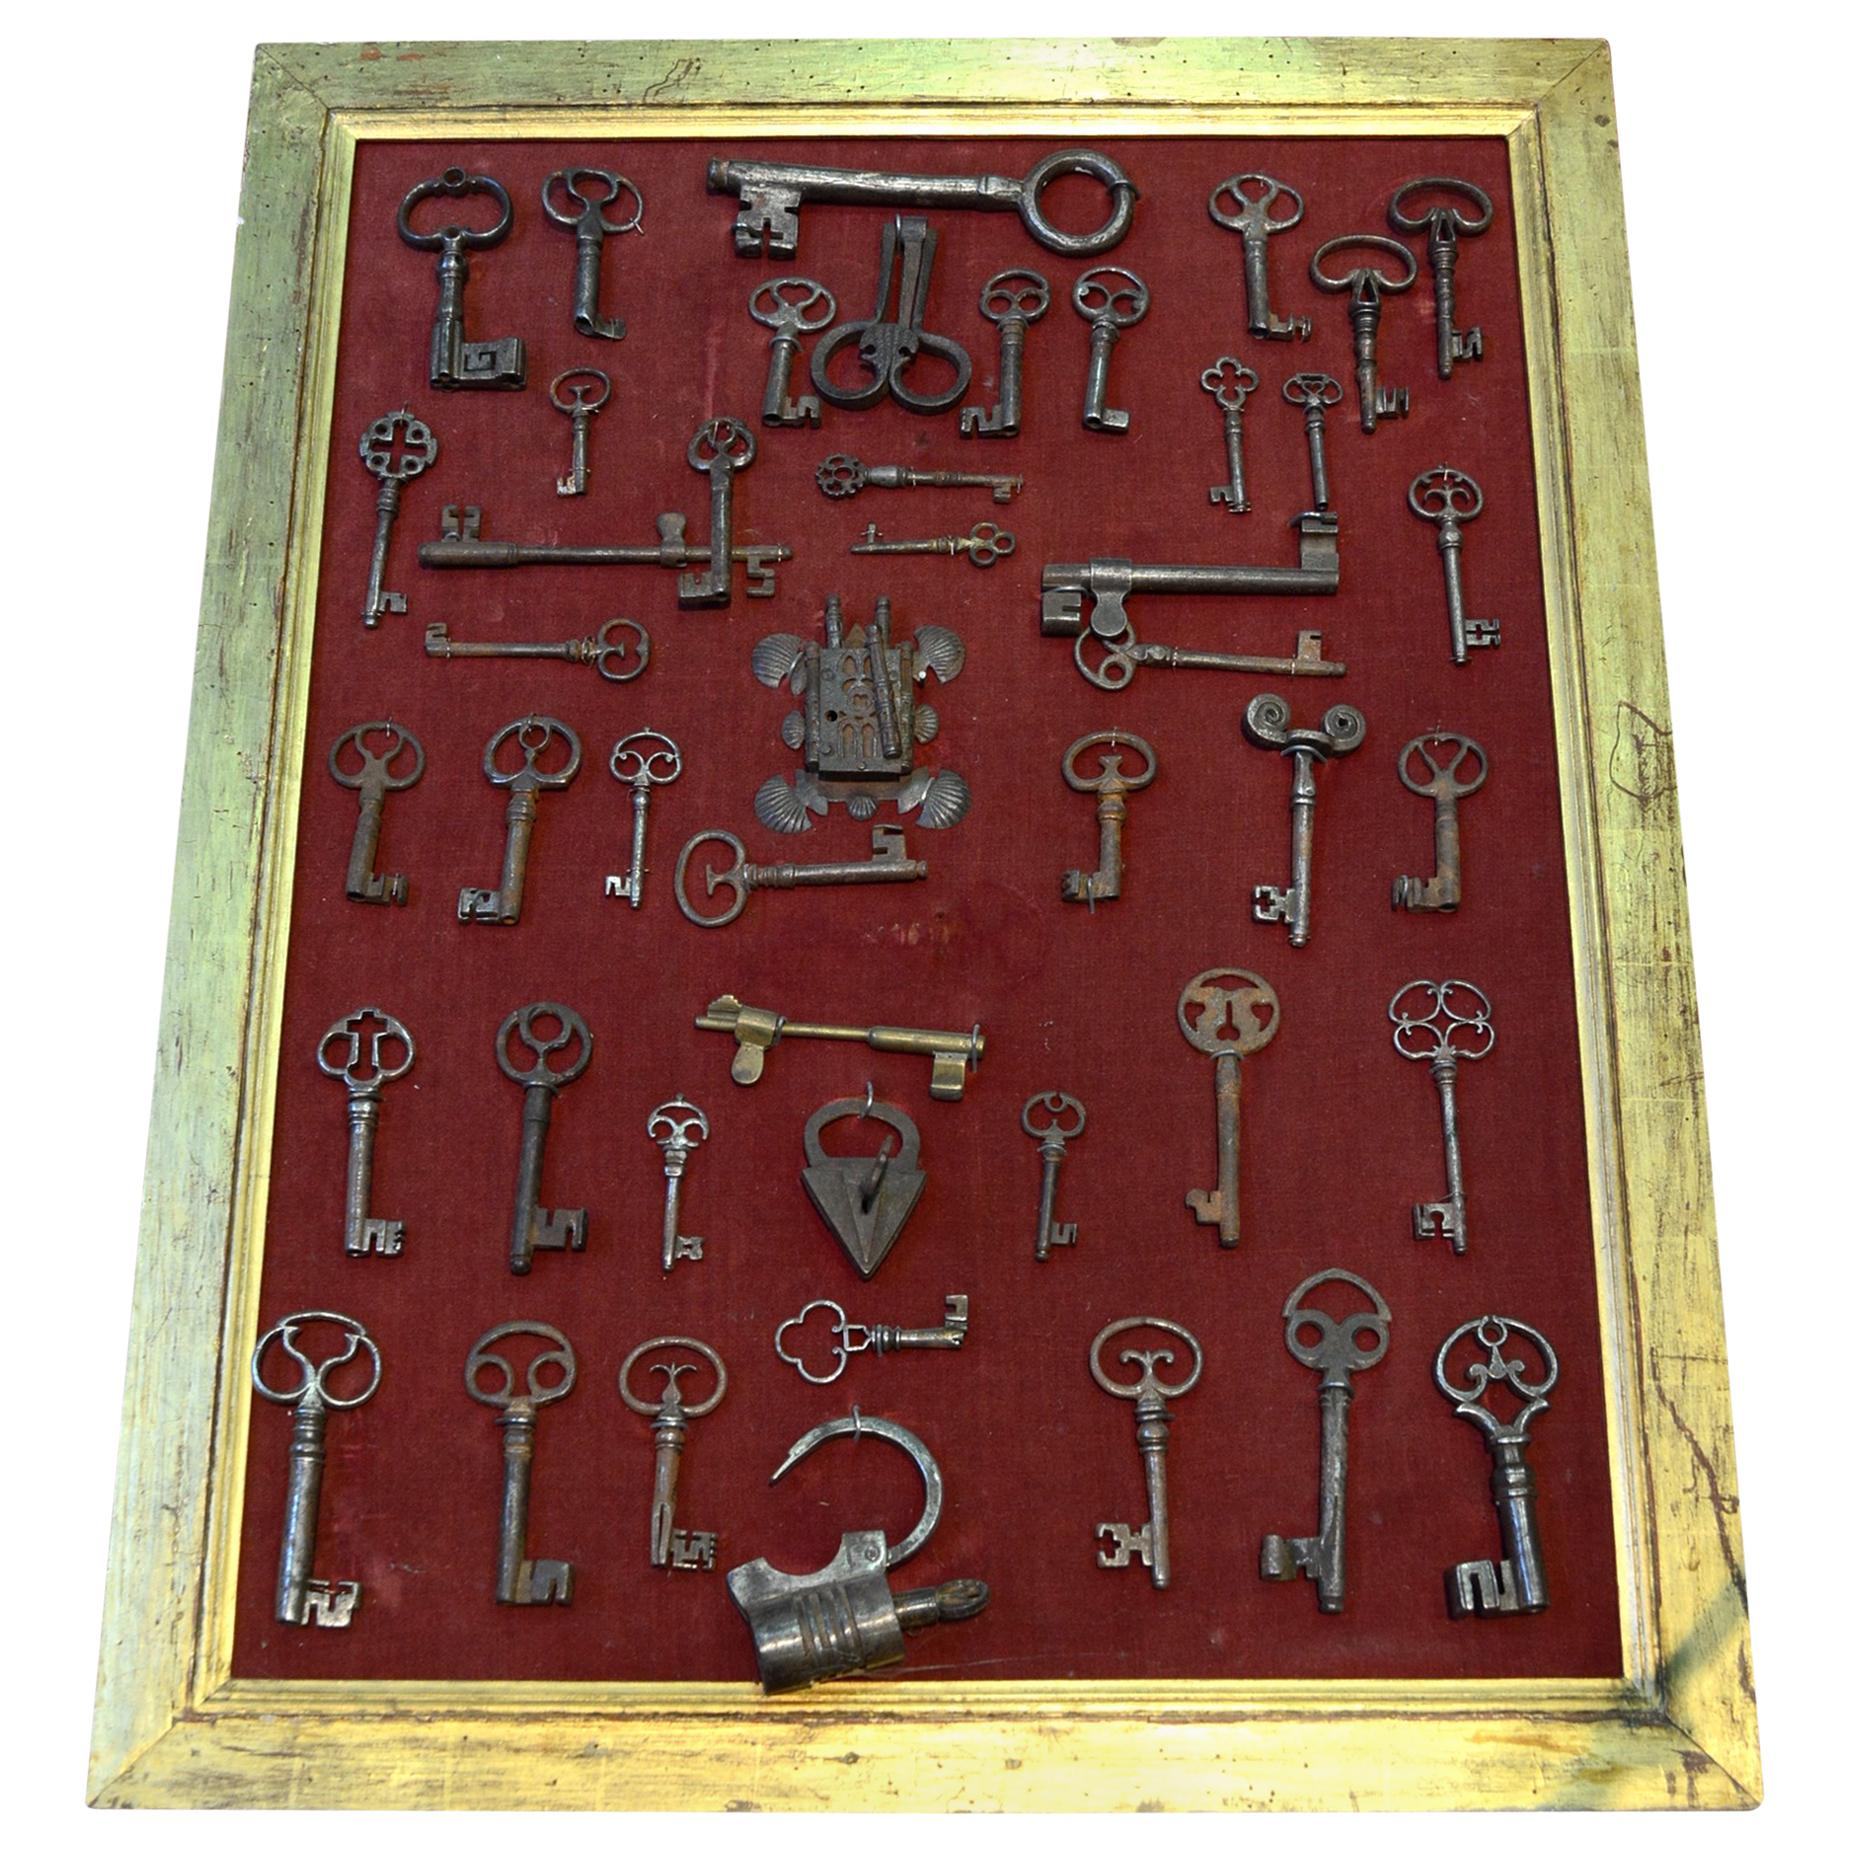 Wrought Iron Antique Keys, Locks and Ironwork, 15th-19th Century